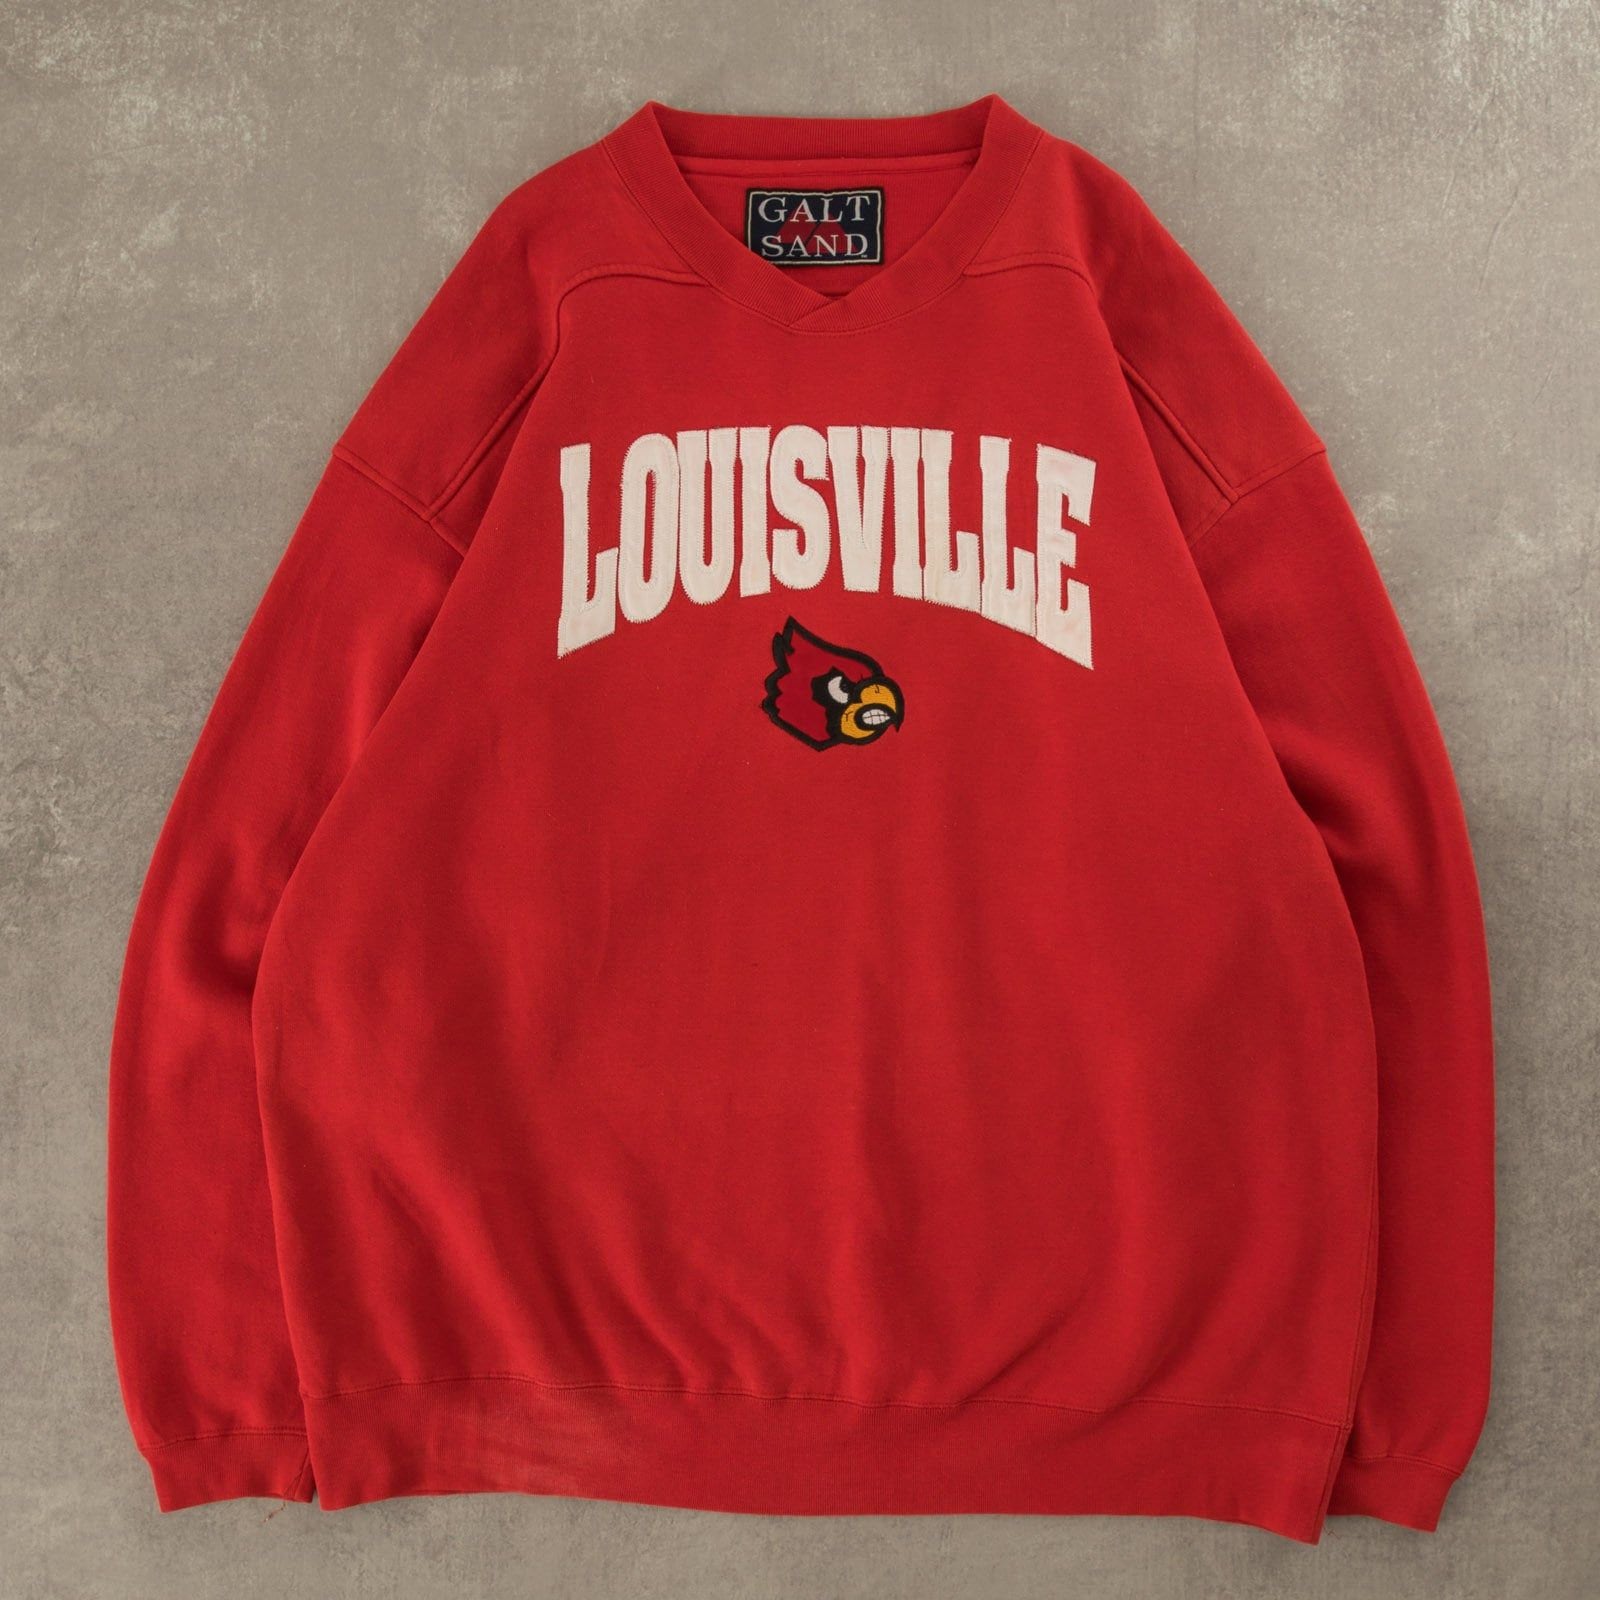 University of Louisville Cardinals One of a Kind Vintage Sweatshirt